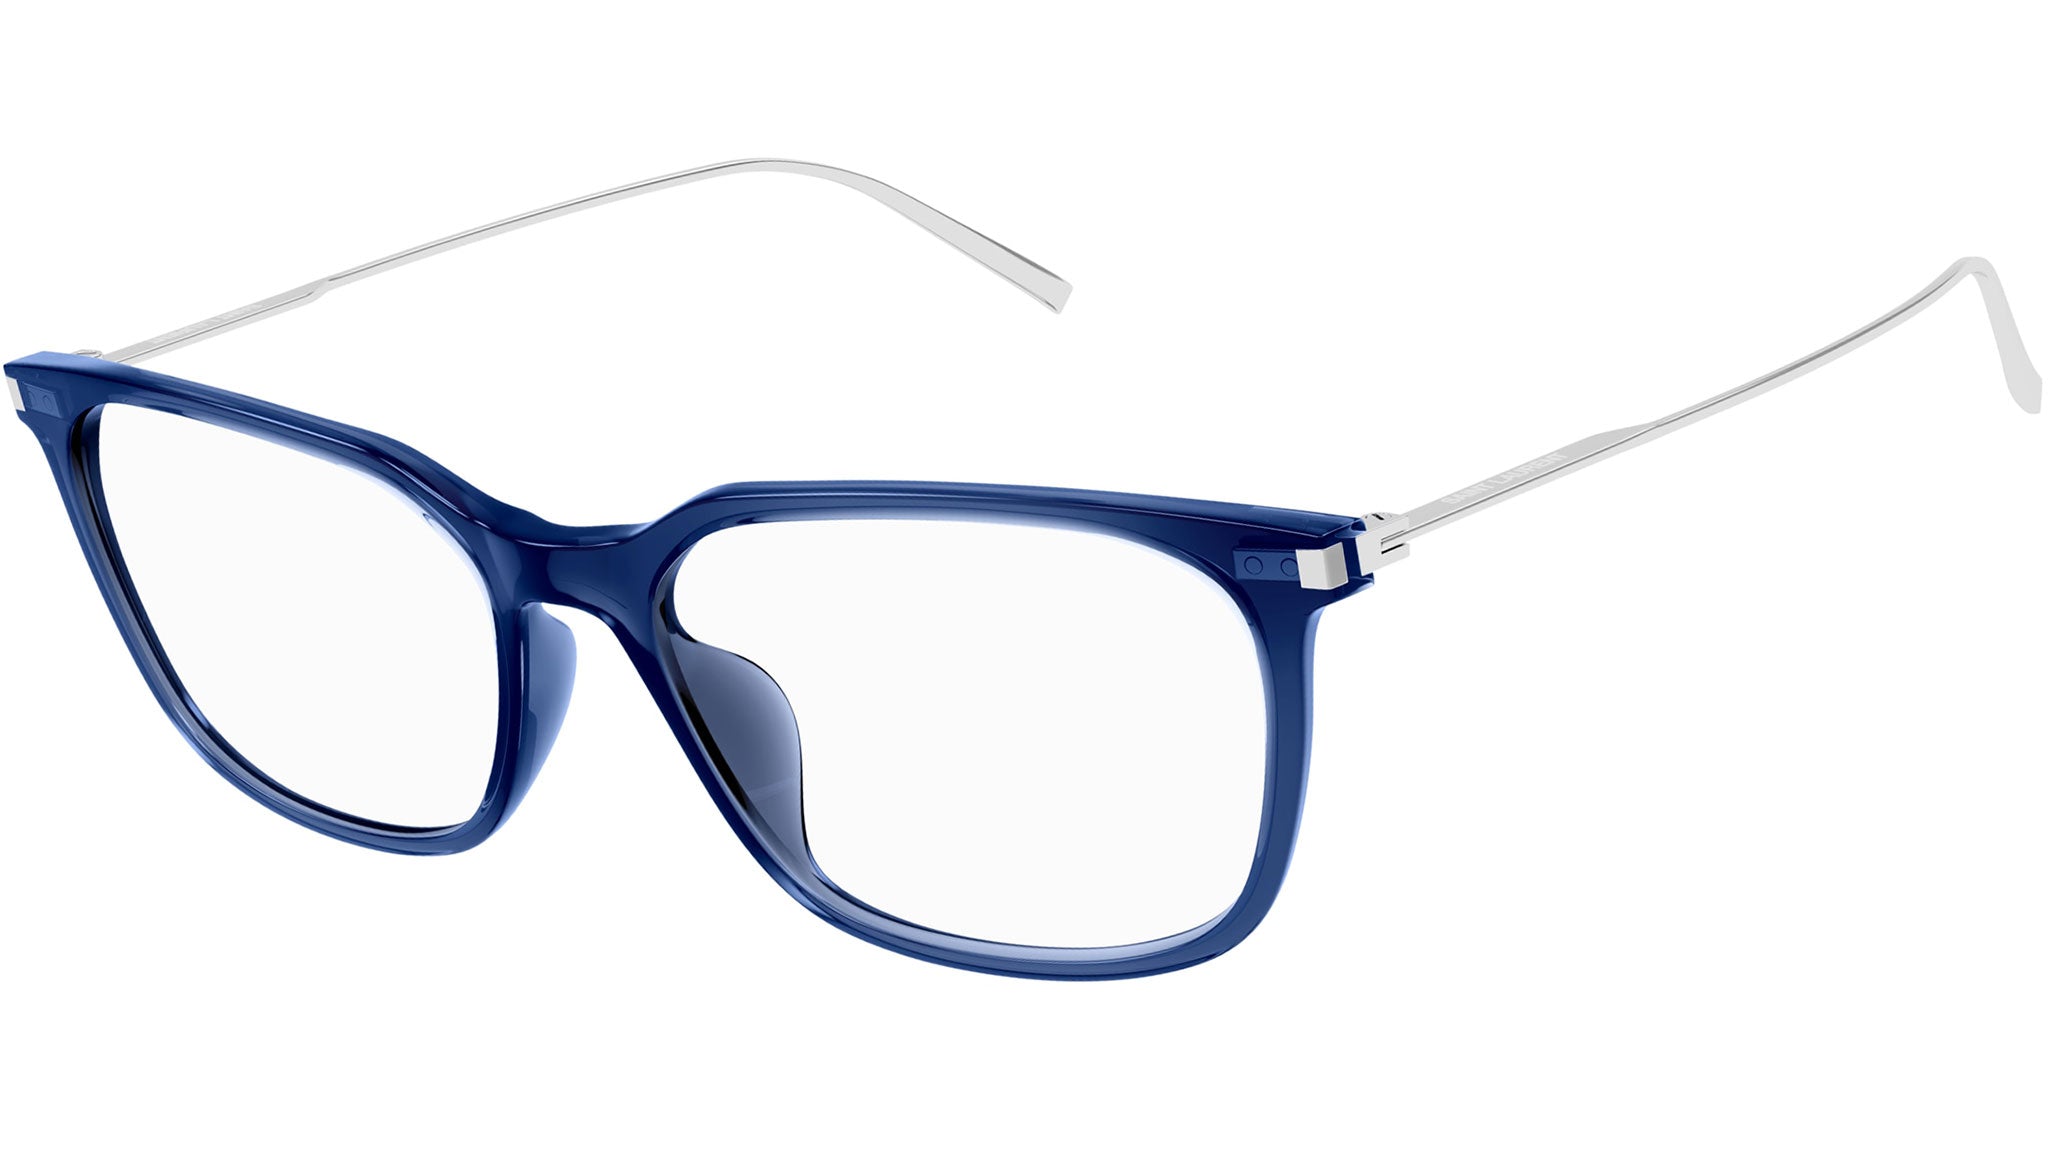 Authentic Yves Saint Laurent Glasses YSL 4164 Y426 Blue 54mm Rimless Frames  RX